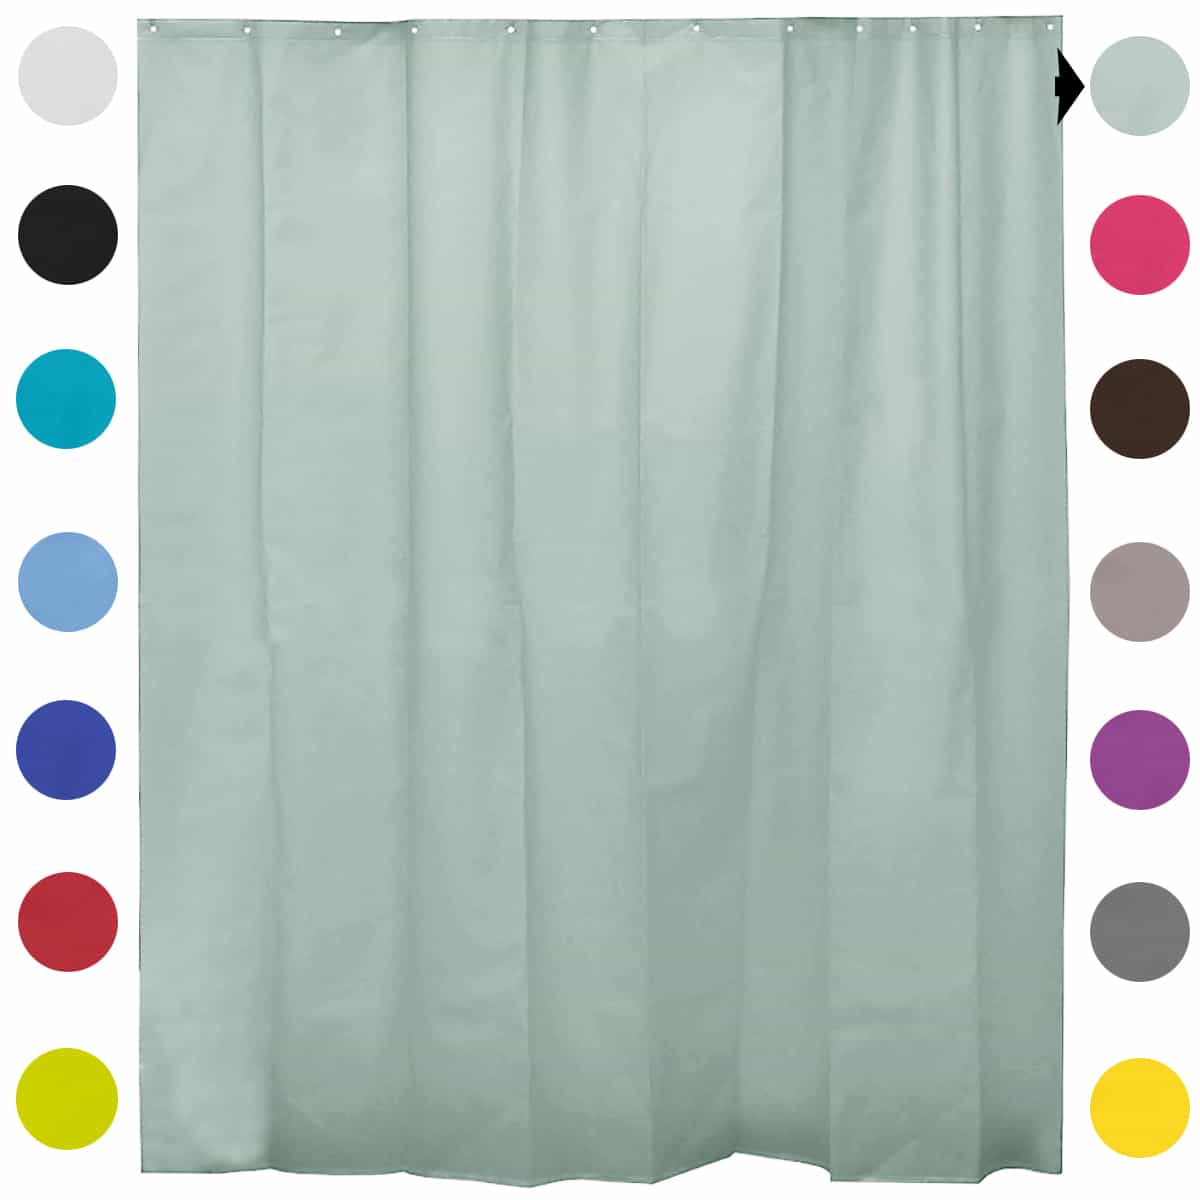 Extra Length PEVA Bathroom Shower Curtain Almond Green 71"L x 79"H